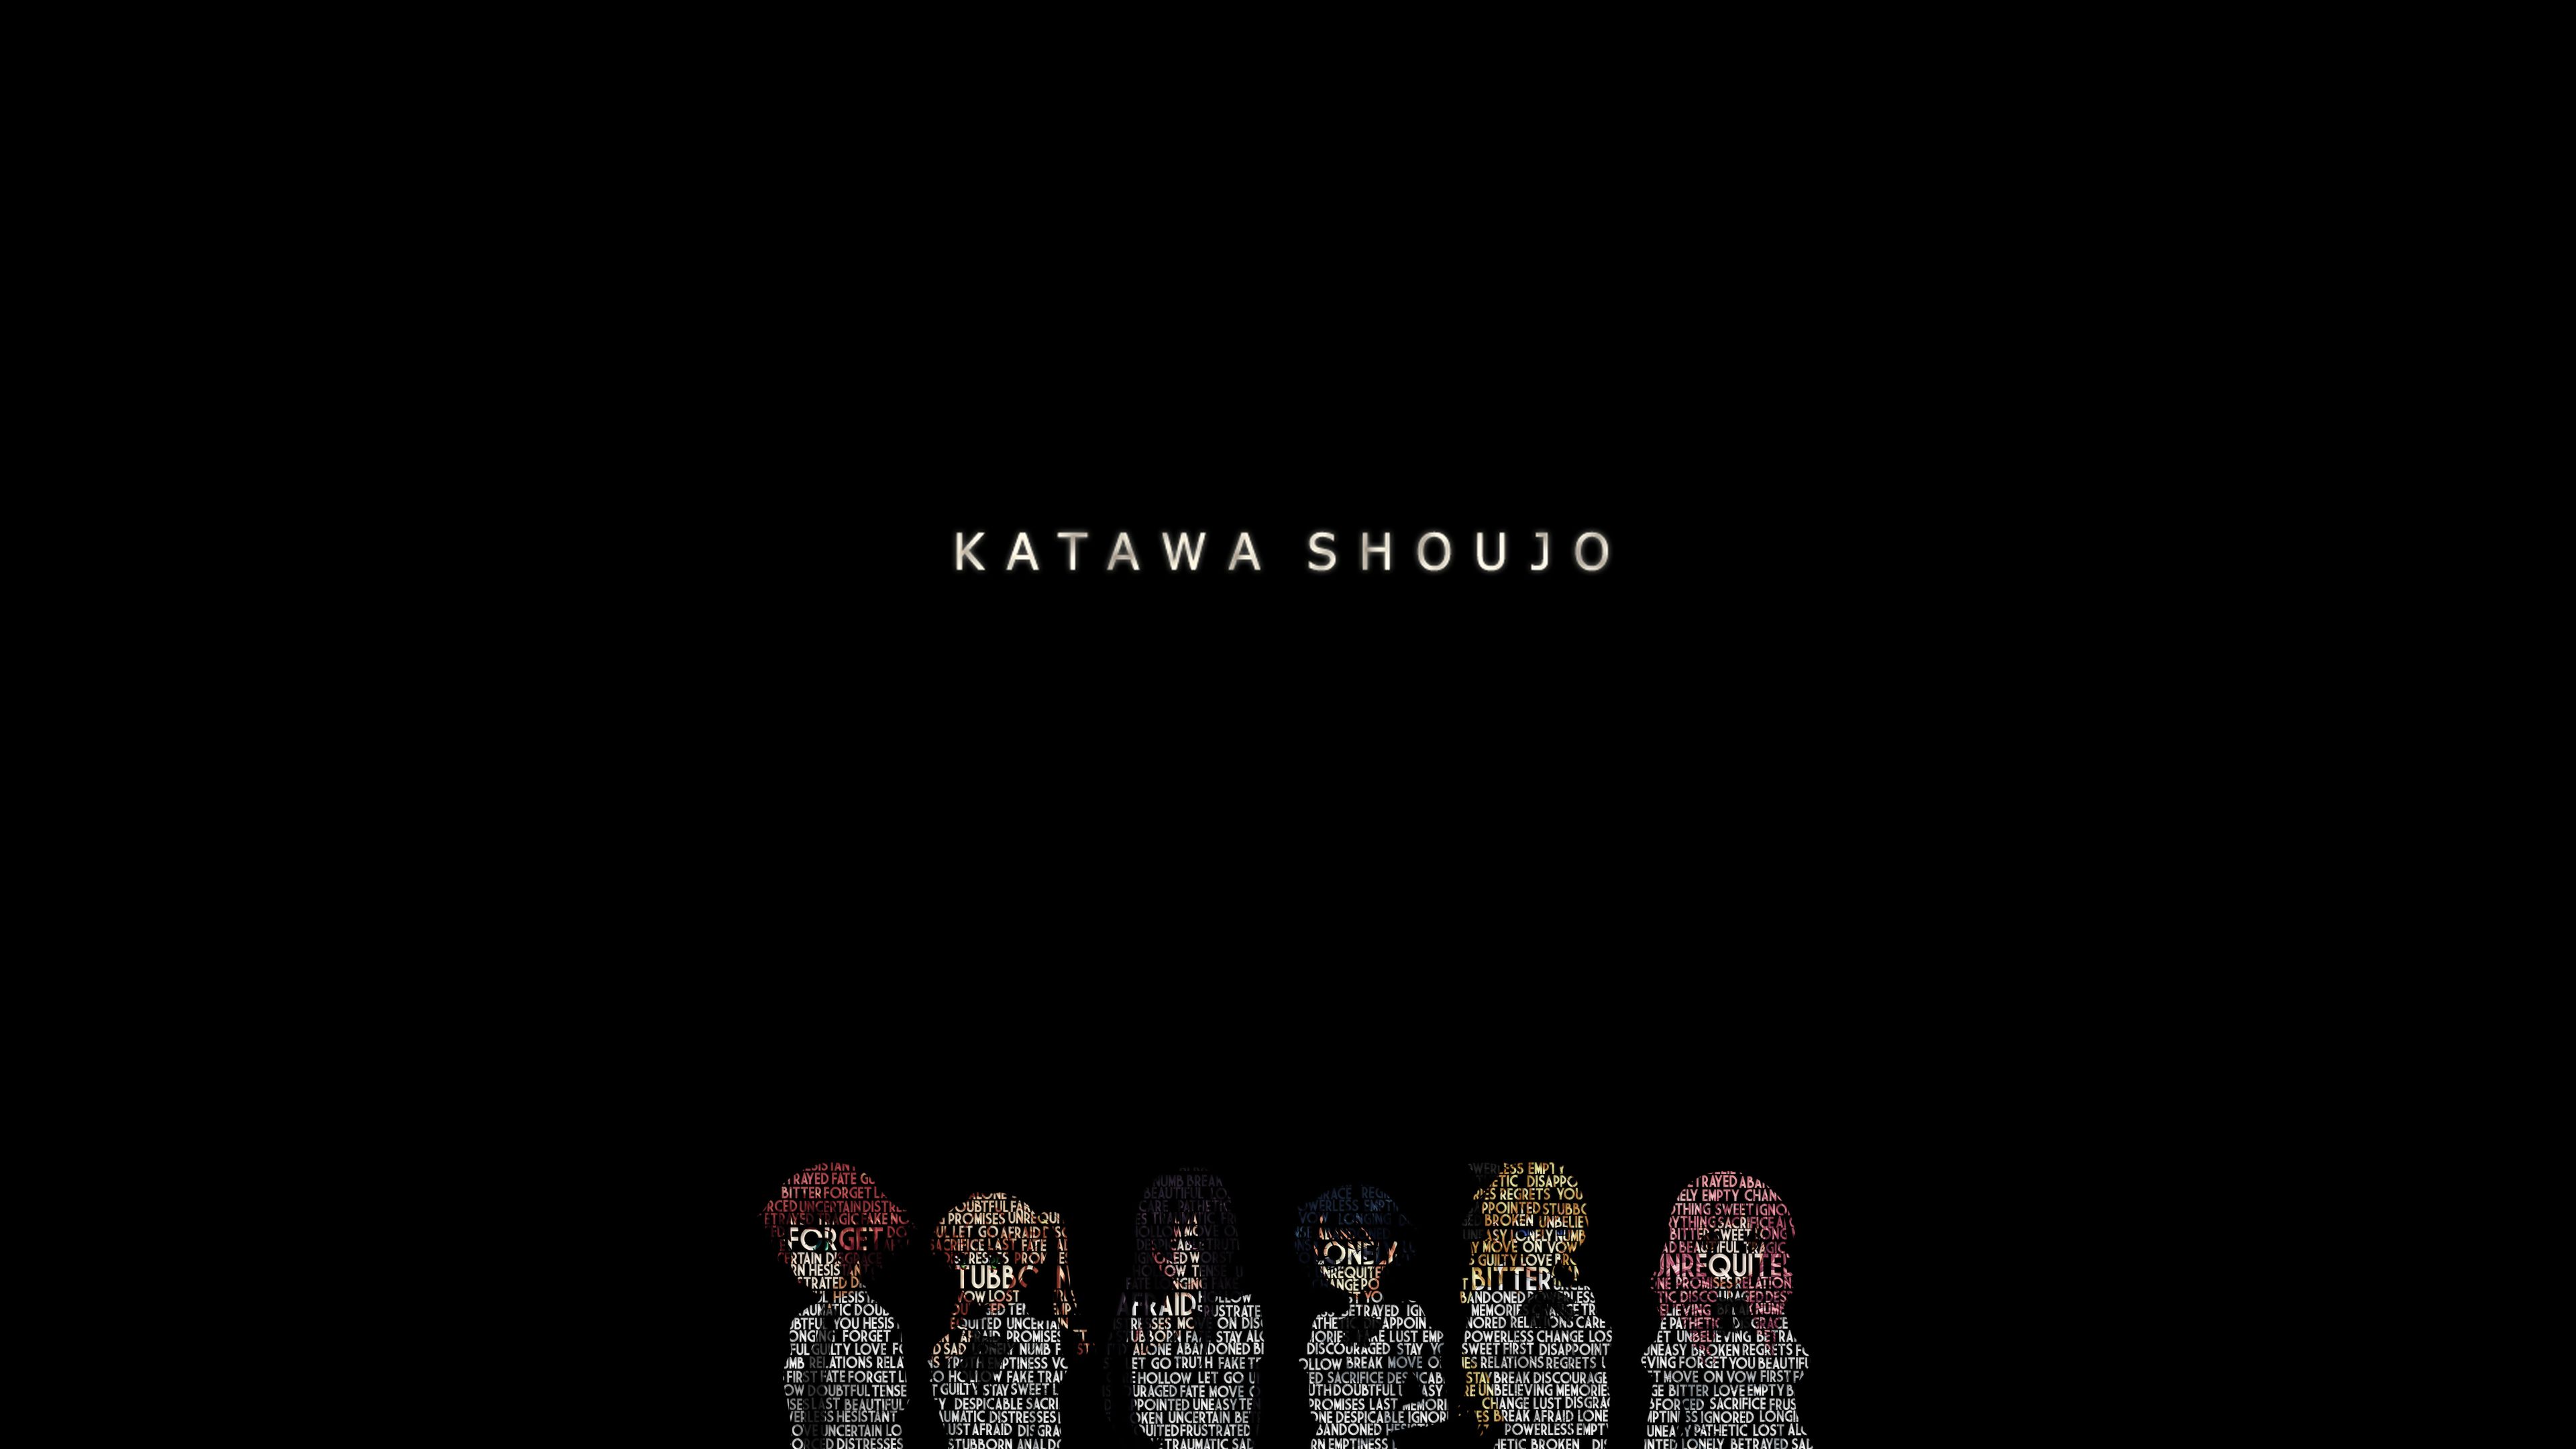 Descarga gratis la imagen Animado, Katawa Shoujo en el escritorio de tu PC